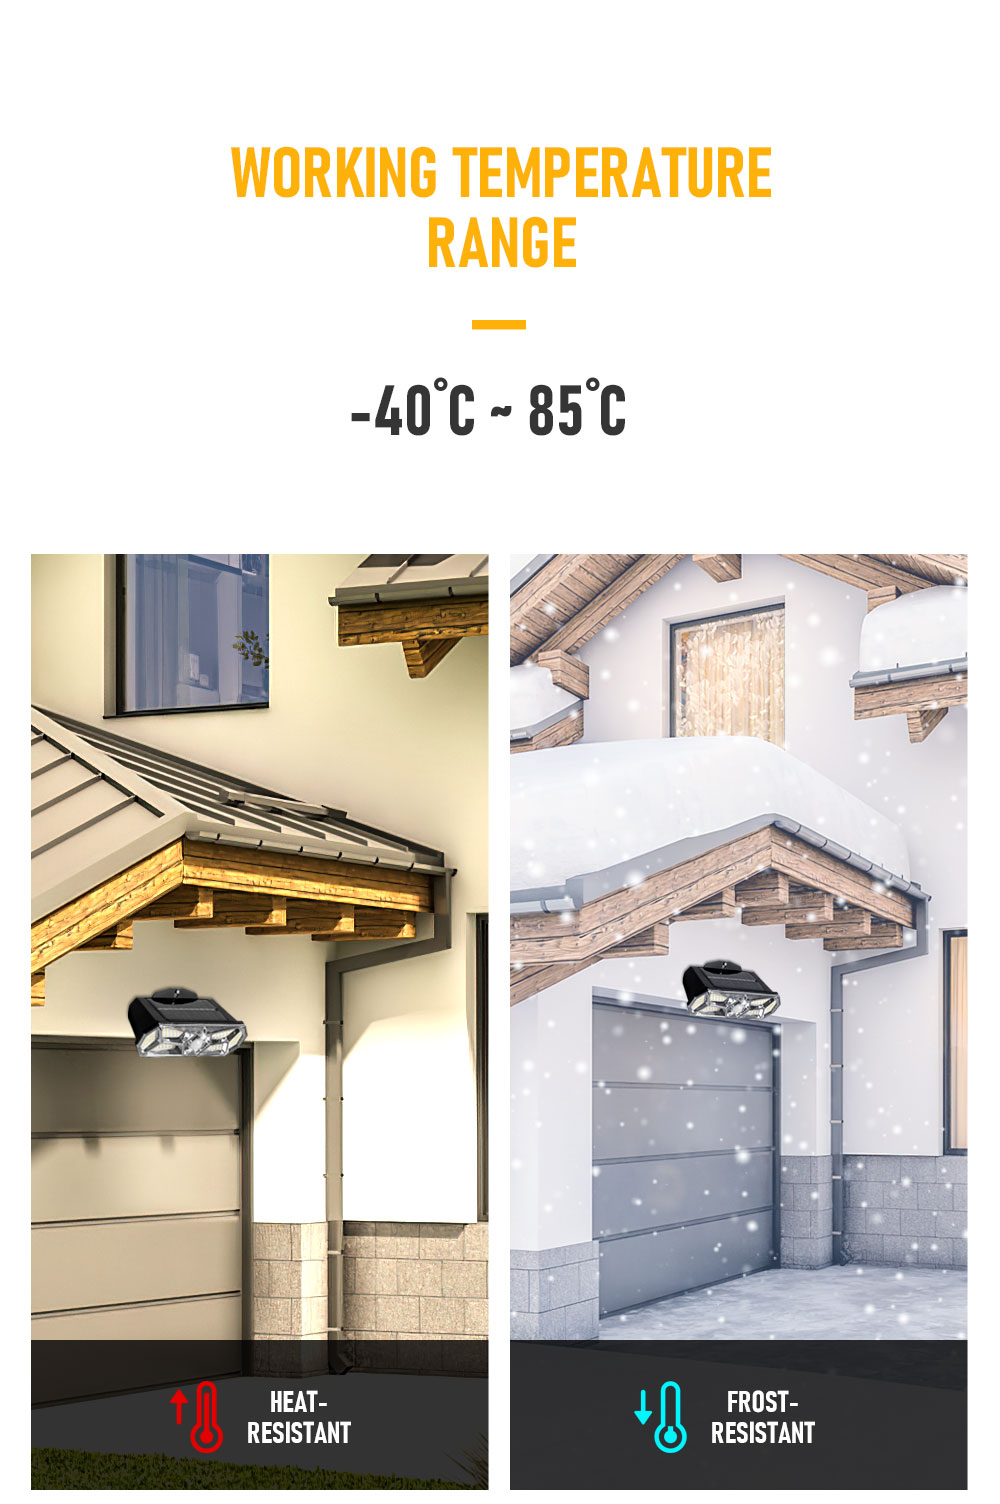 126 LED Outdoor Solar Lights Waterproof Motion Sensor 3 Modes Solar Wall Lamp Garden Security Light for Front Door Yard Garage